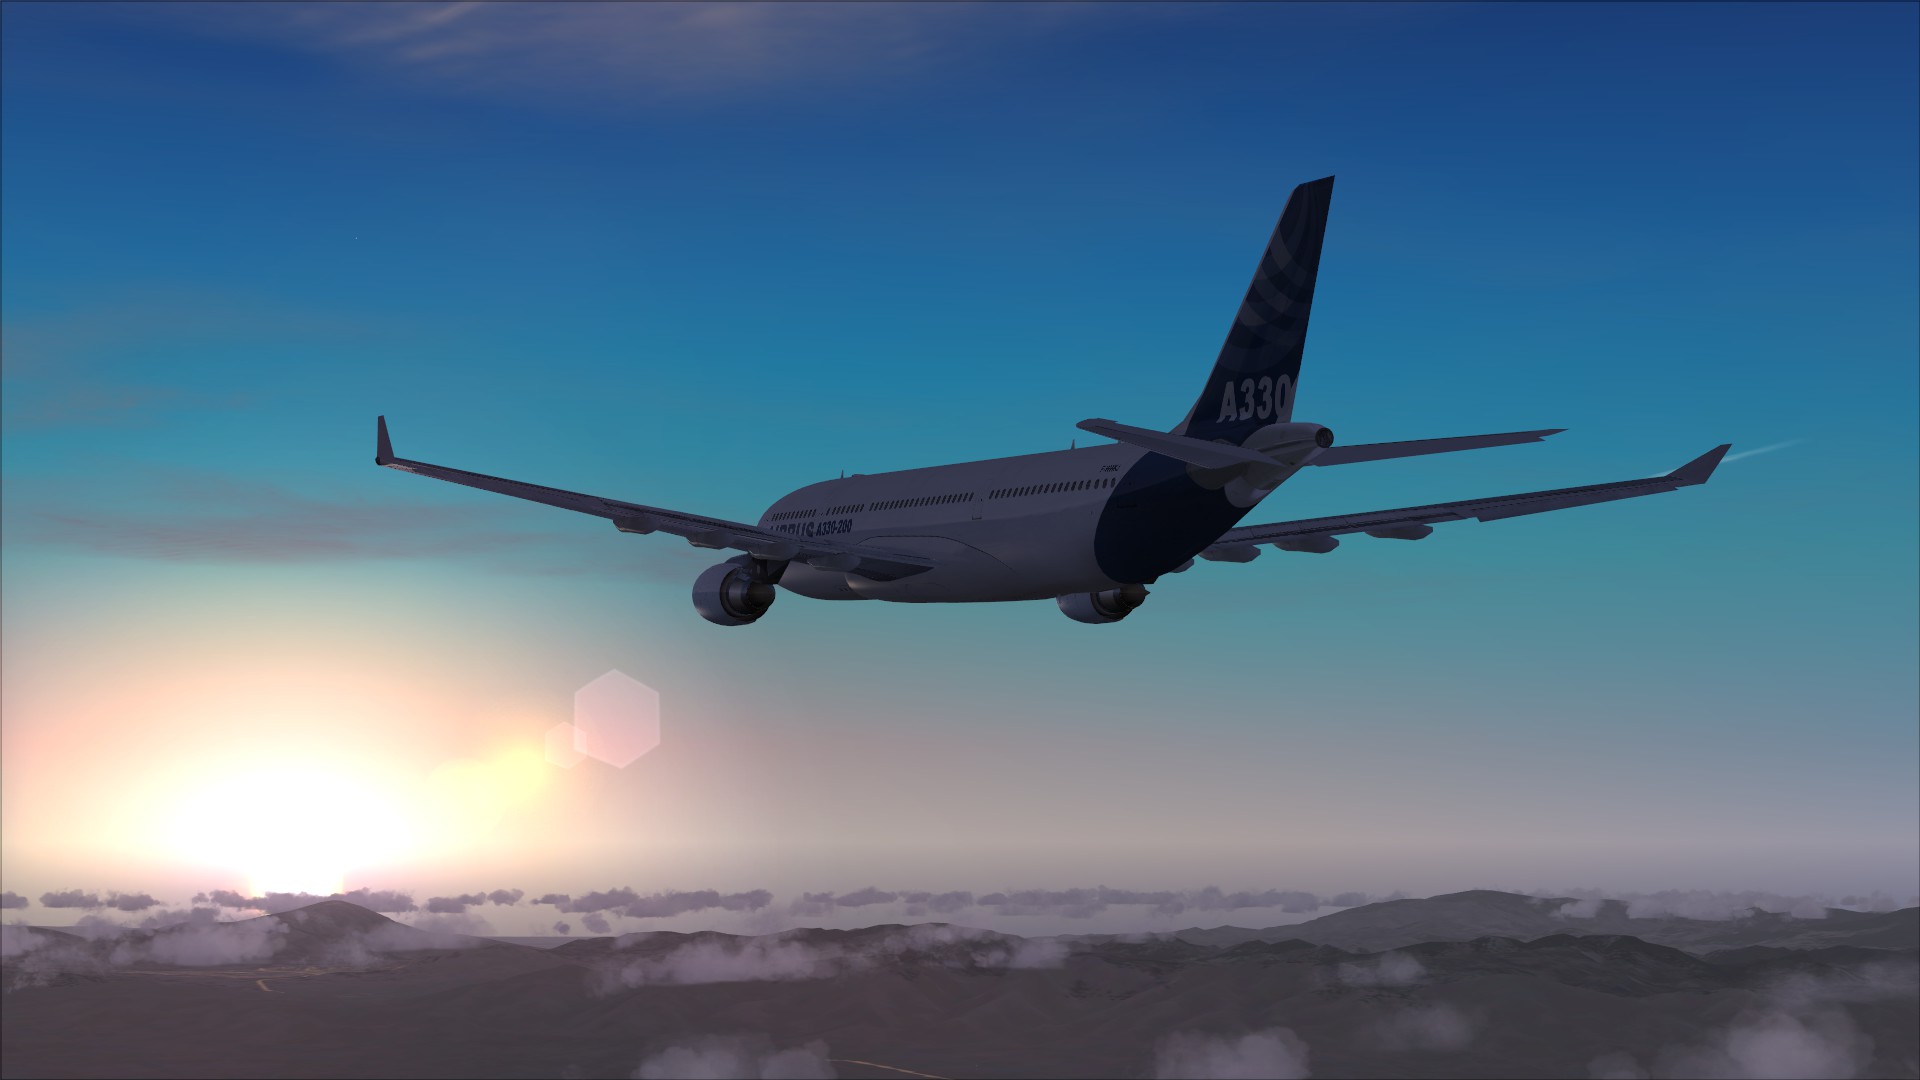 FSX Steam Edition: Airbus Series Vol. 4 Add-On on Steam